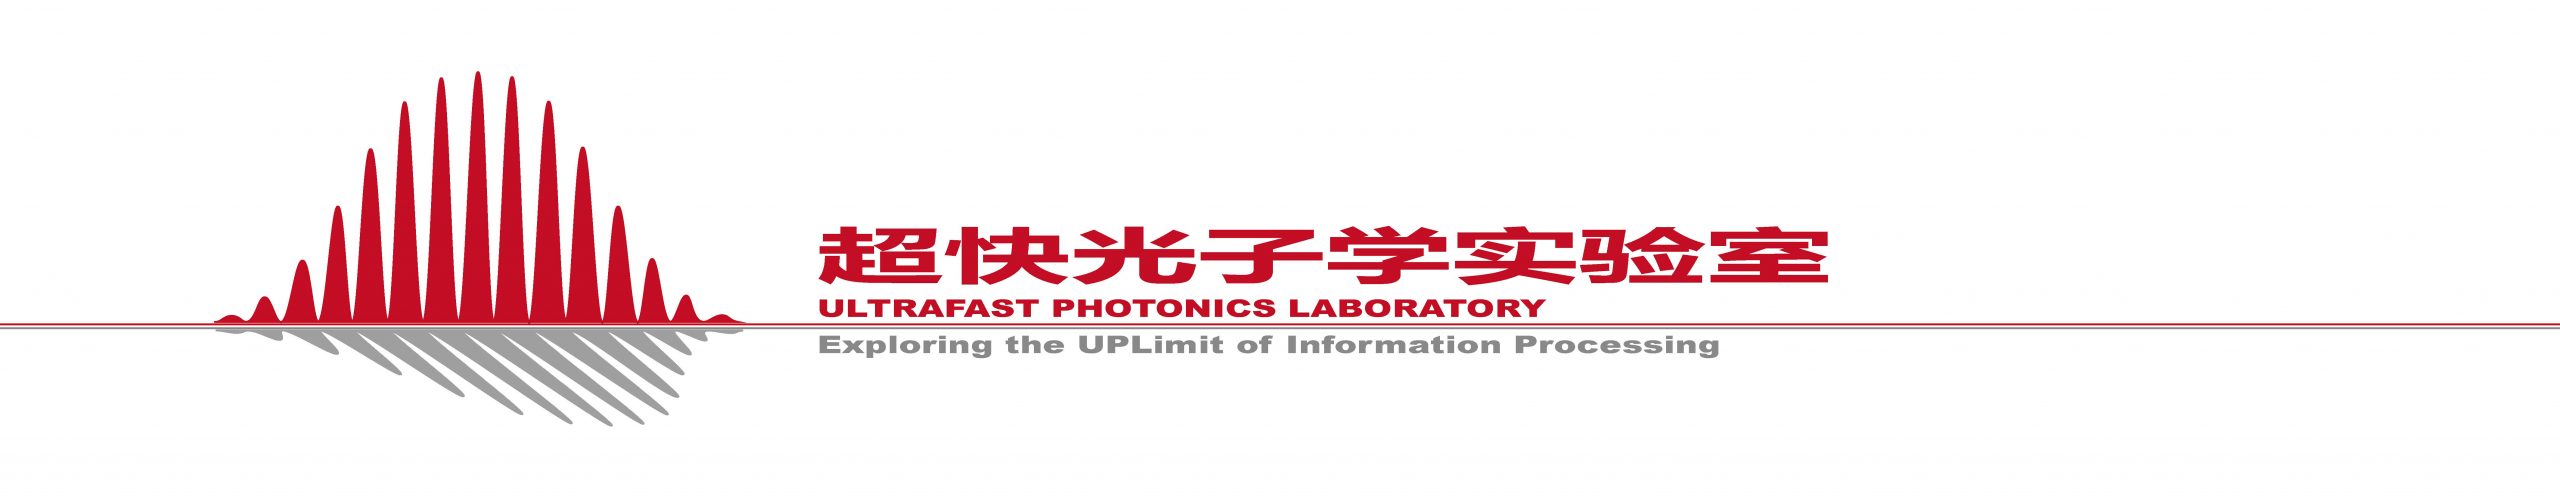 Ultrafast Photonics Lab